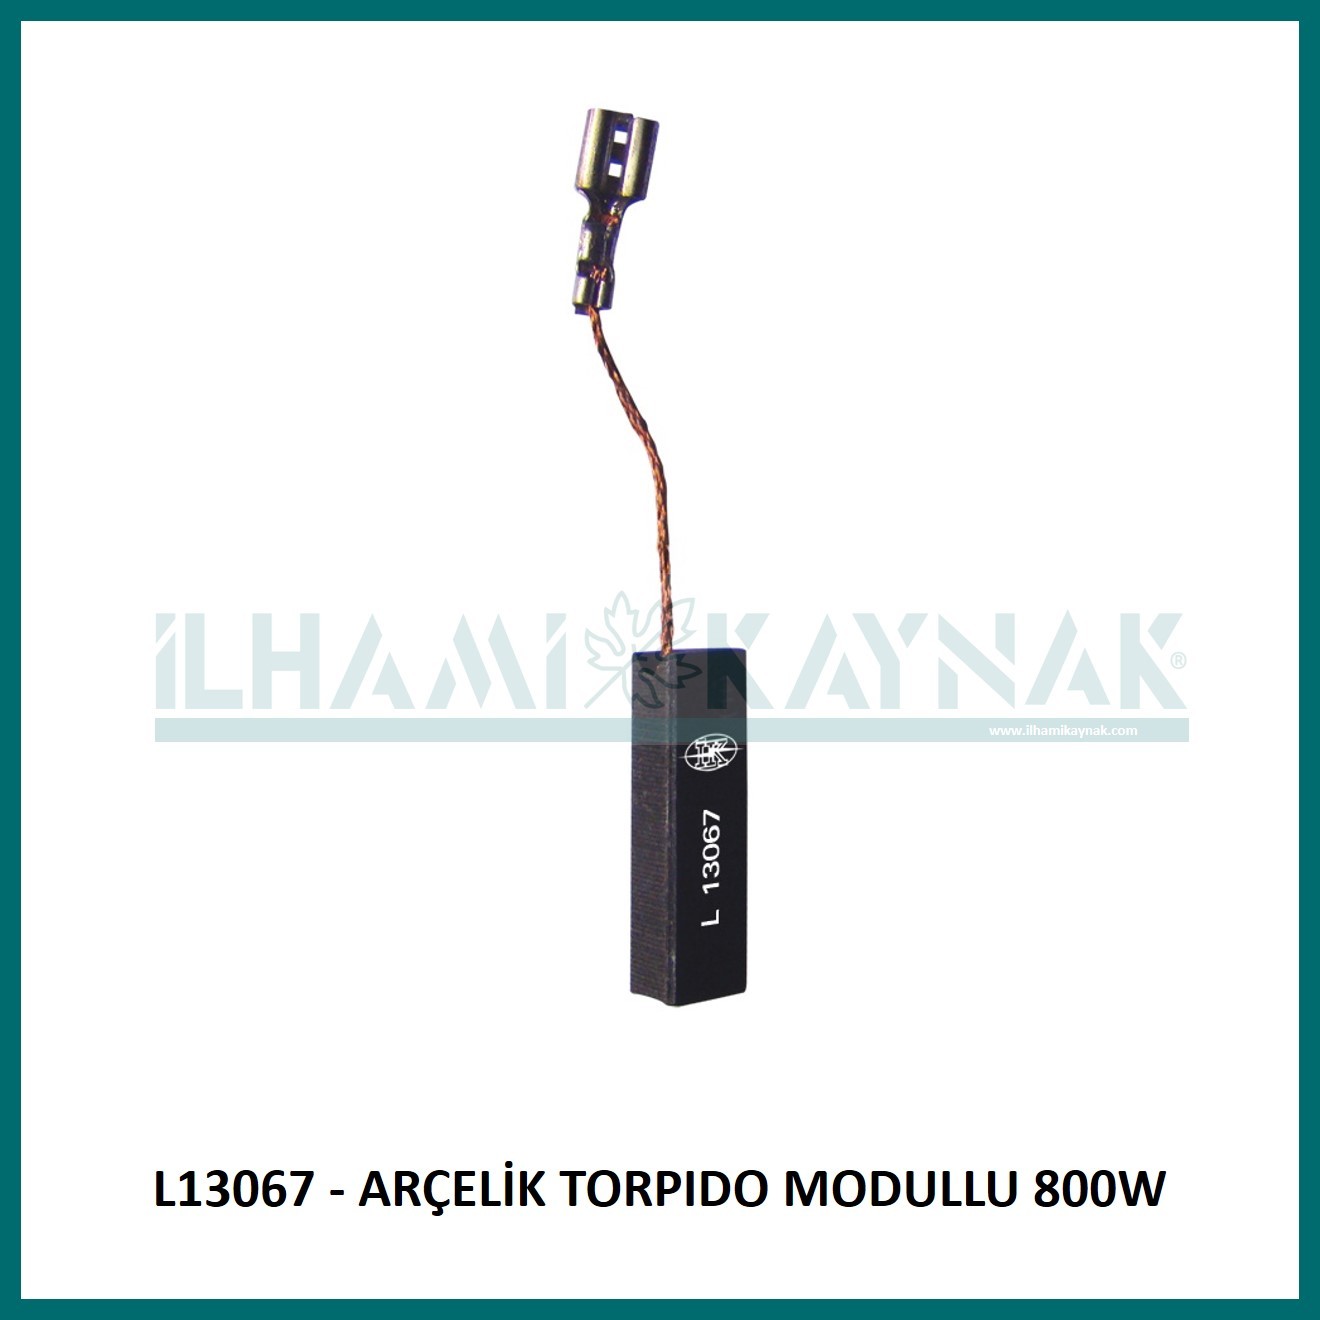 L13067 - ARÇELİK TORPIDO MODULLU 800W - 6,3*8*27 mm - Minimum Satın Alım: 10 Adet.